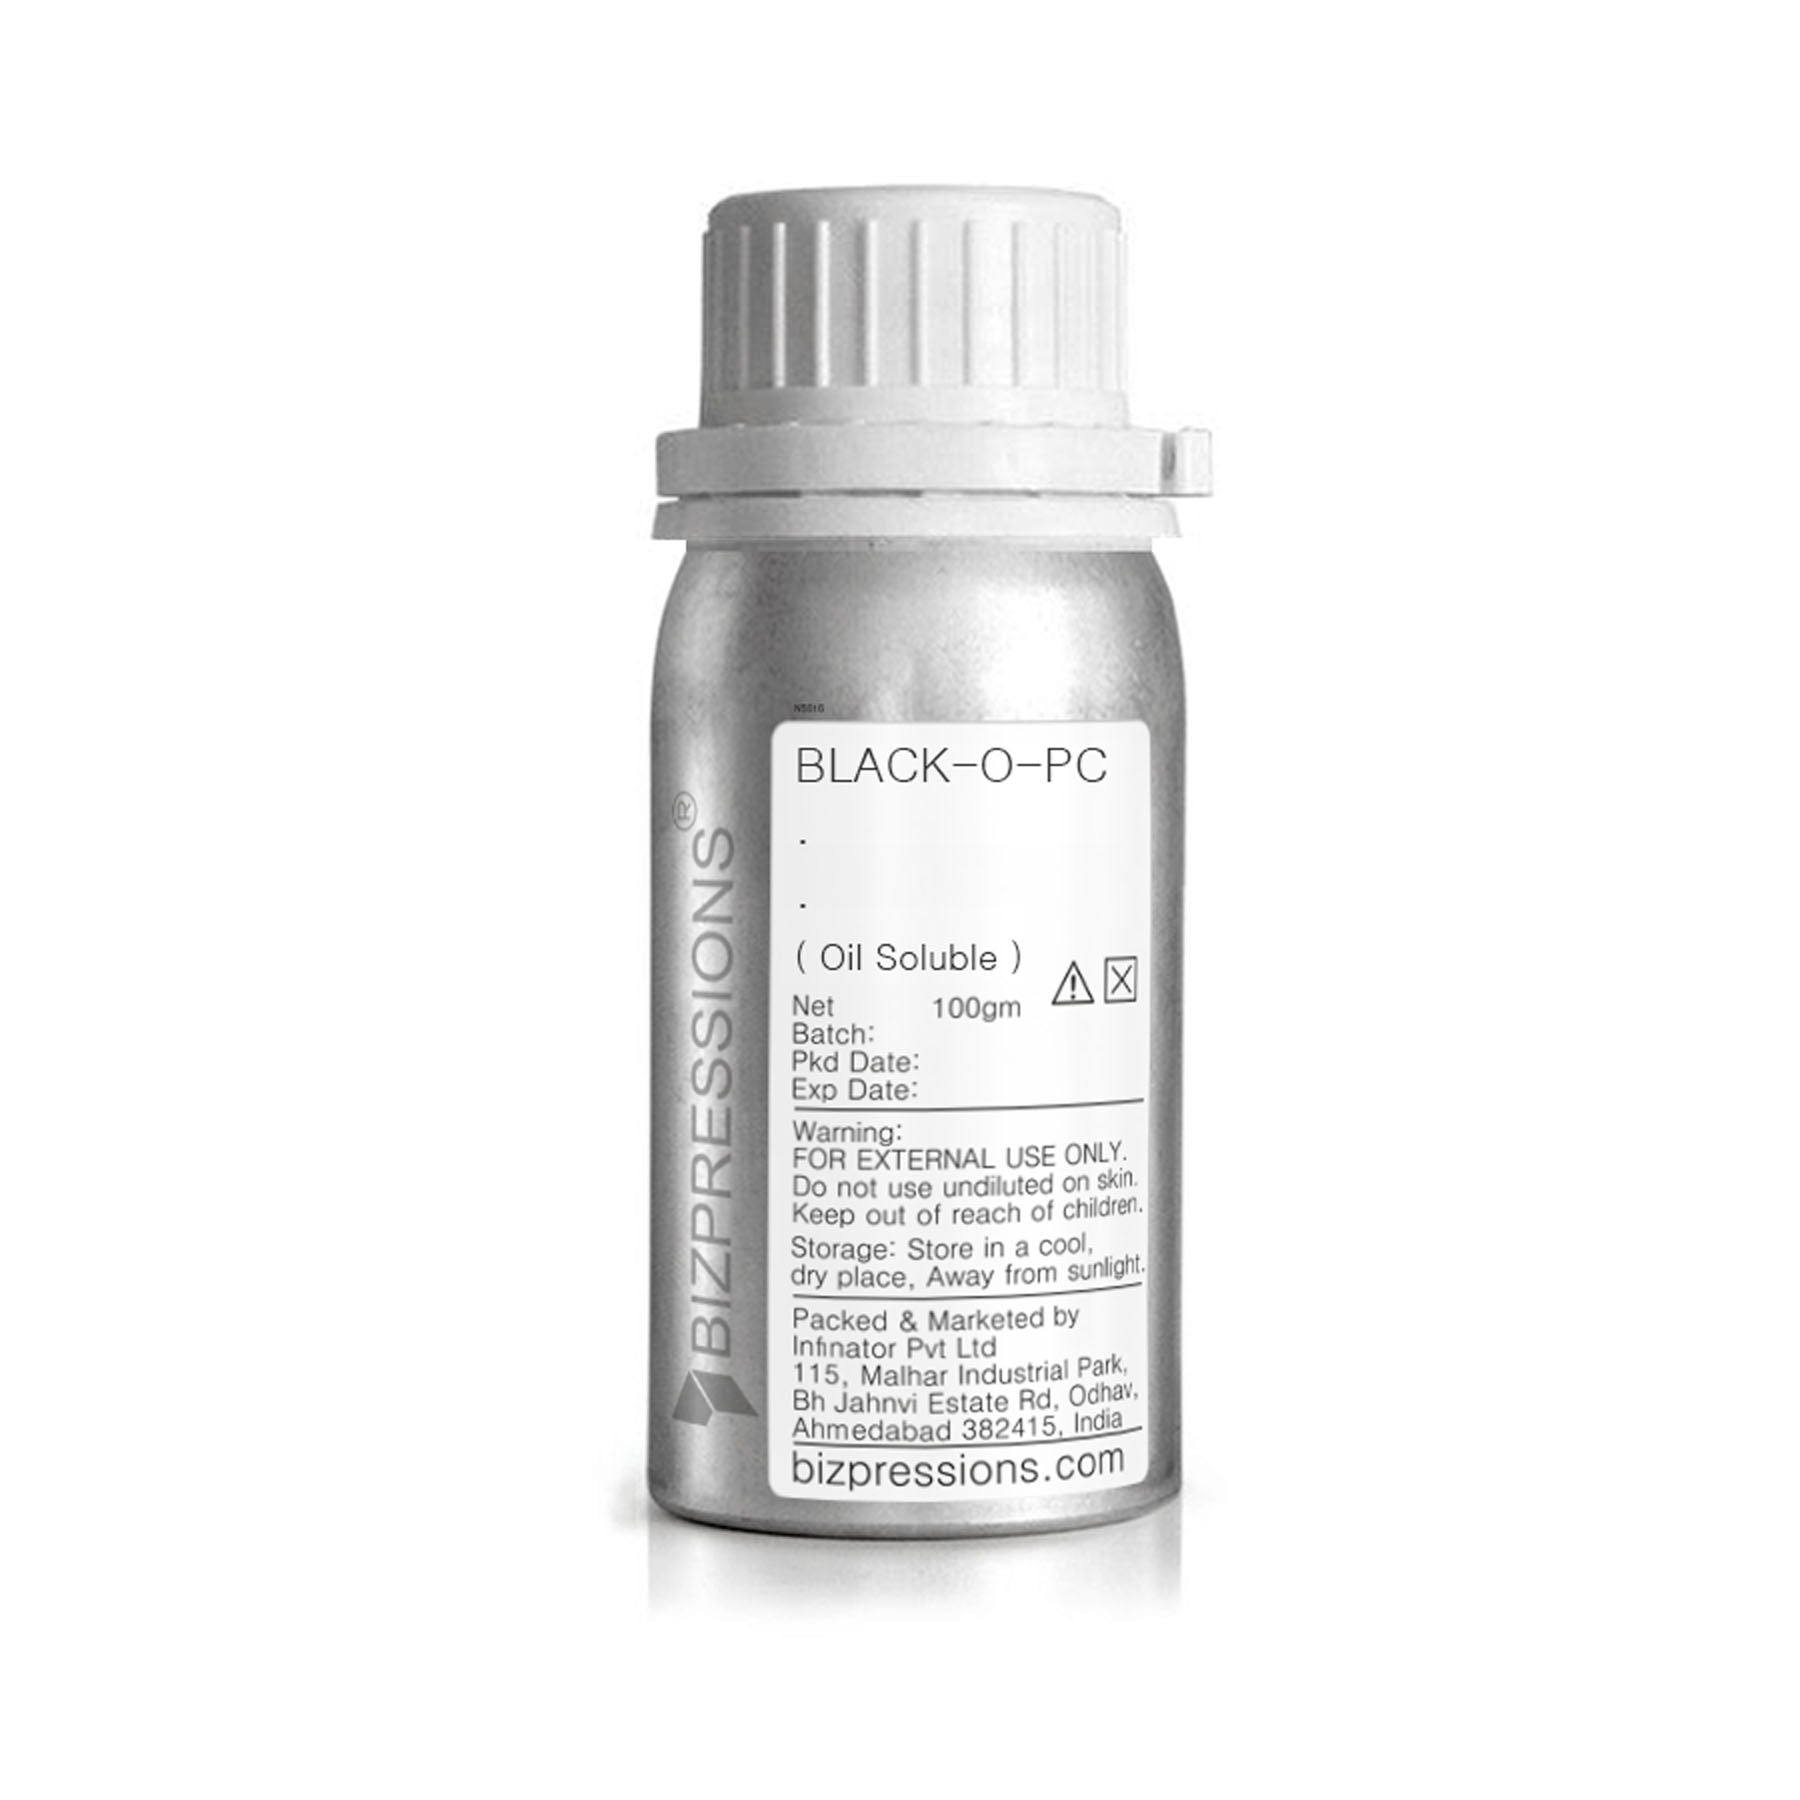 BLACK-O-PC - Fragrance ( Oil Soluble ) - 100 gm